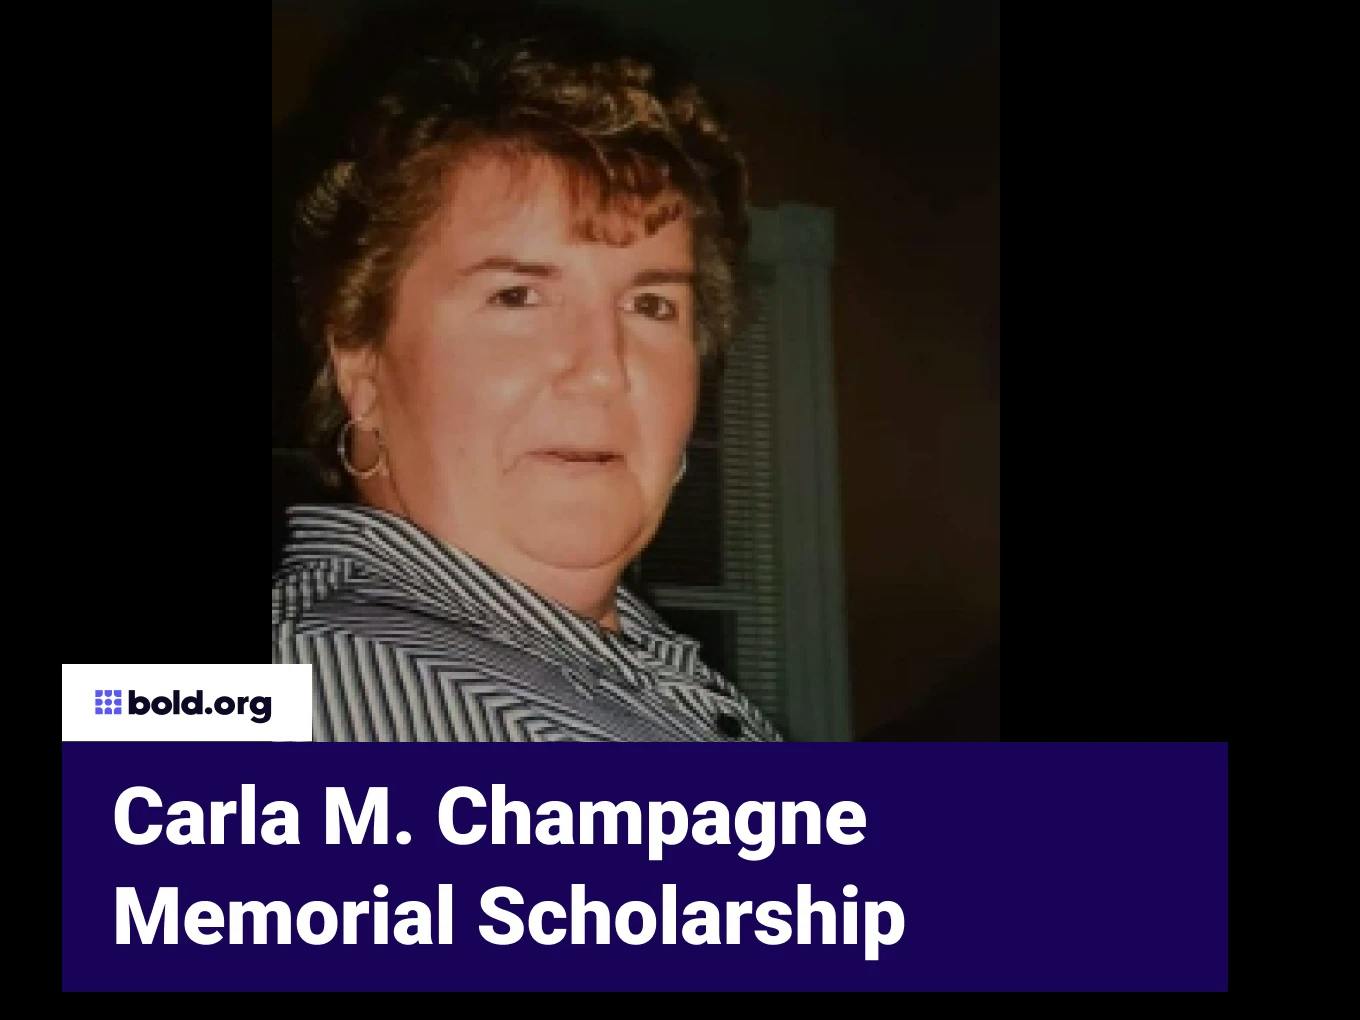 Carla M. Champagne Memorial Scholarship